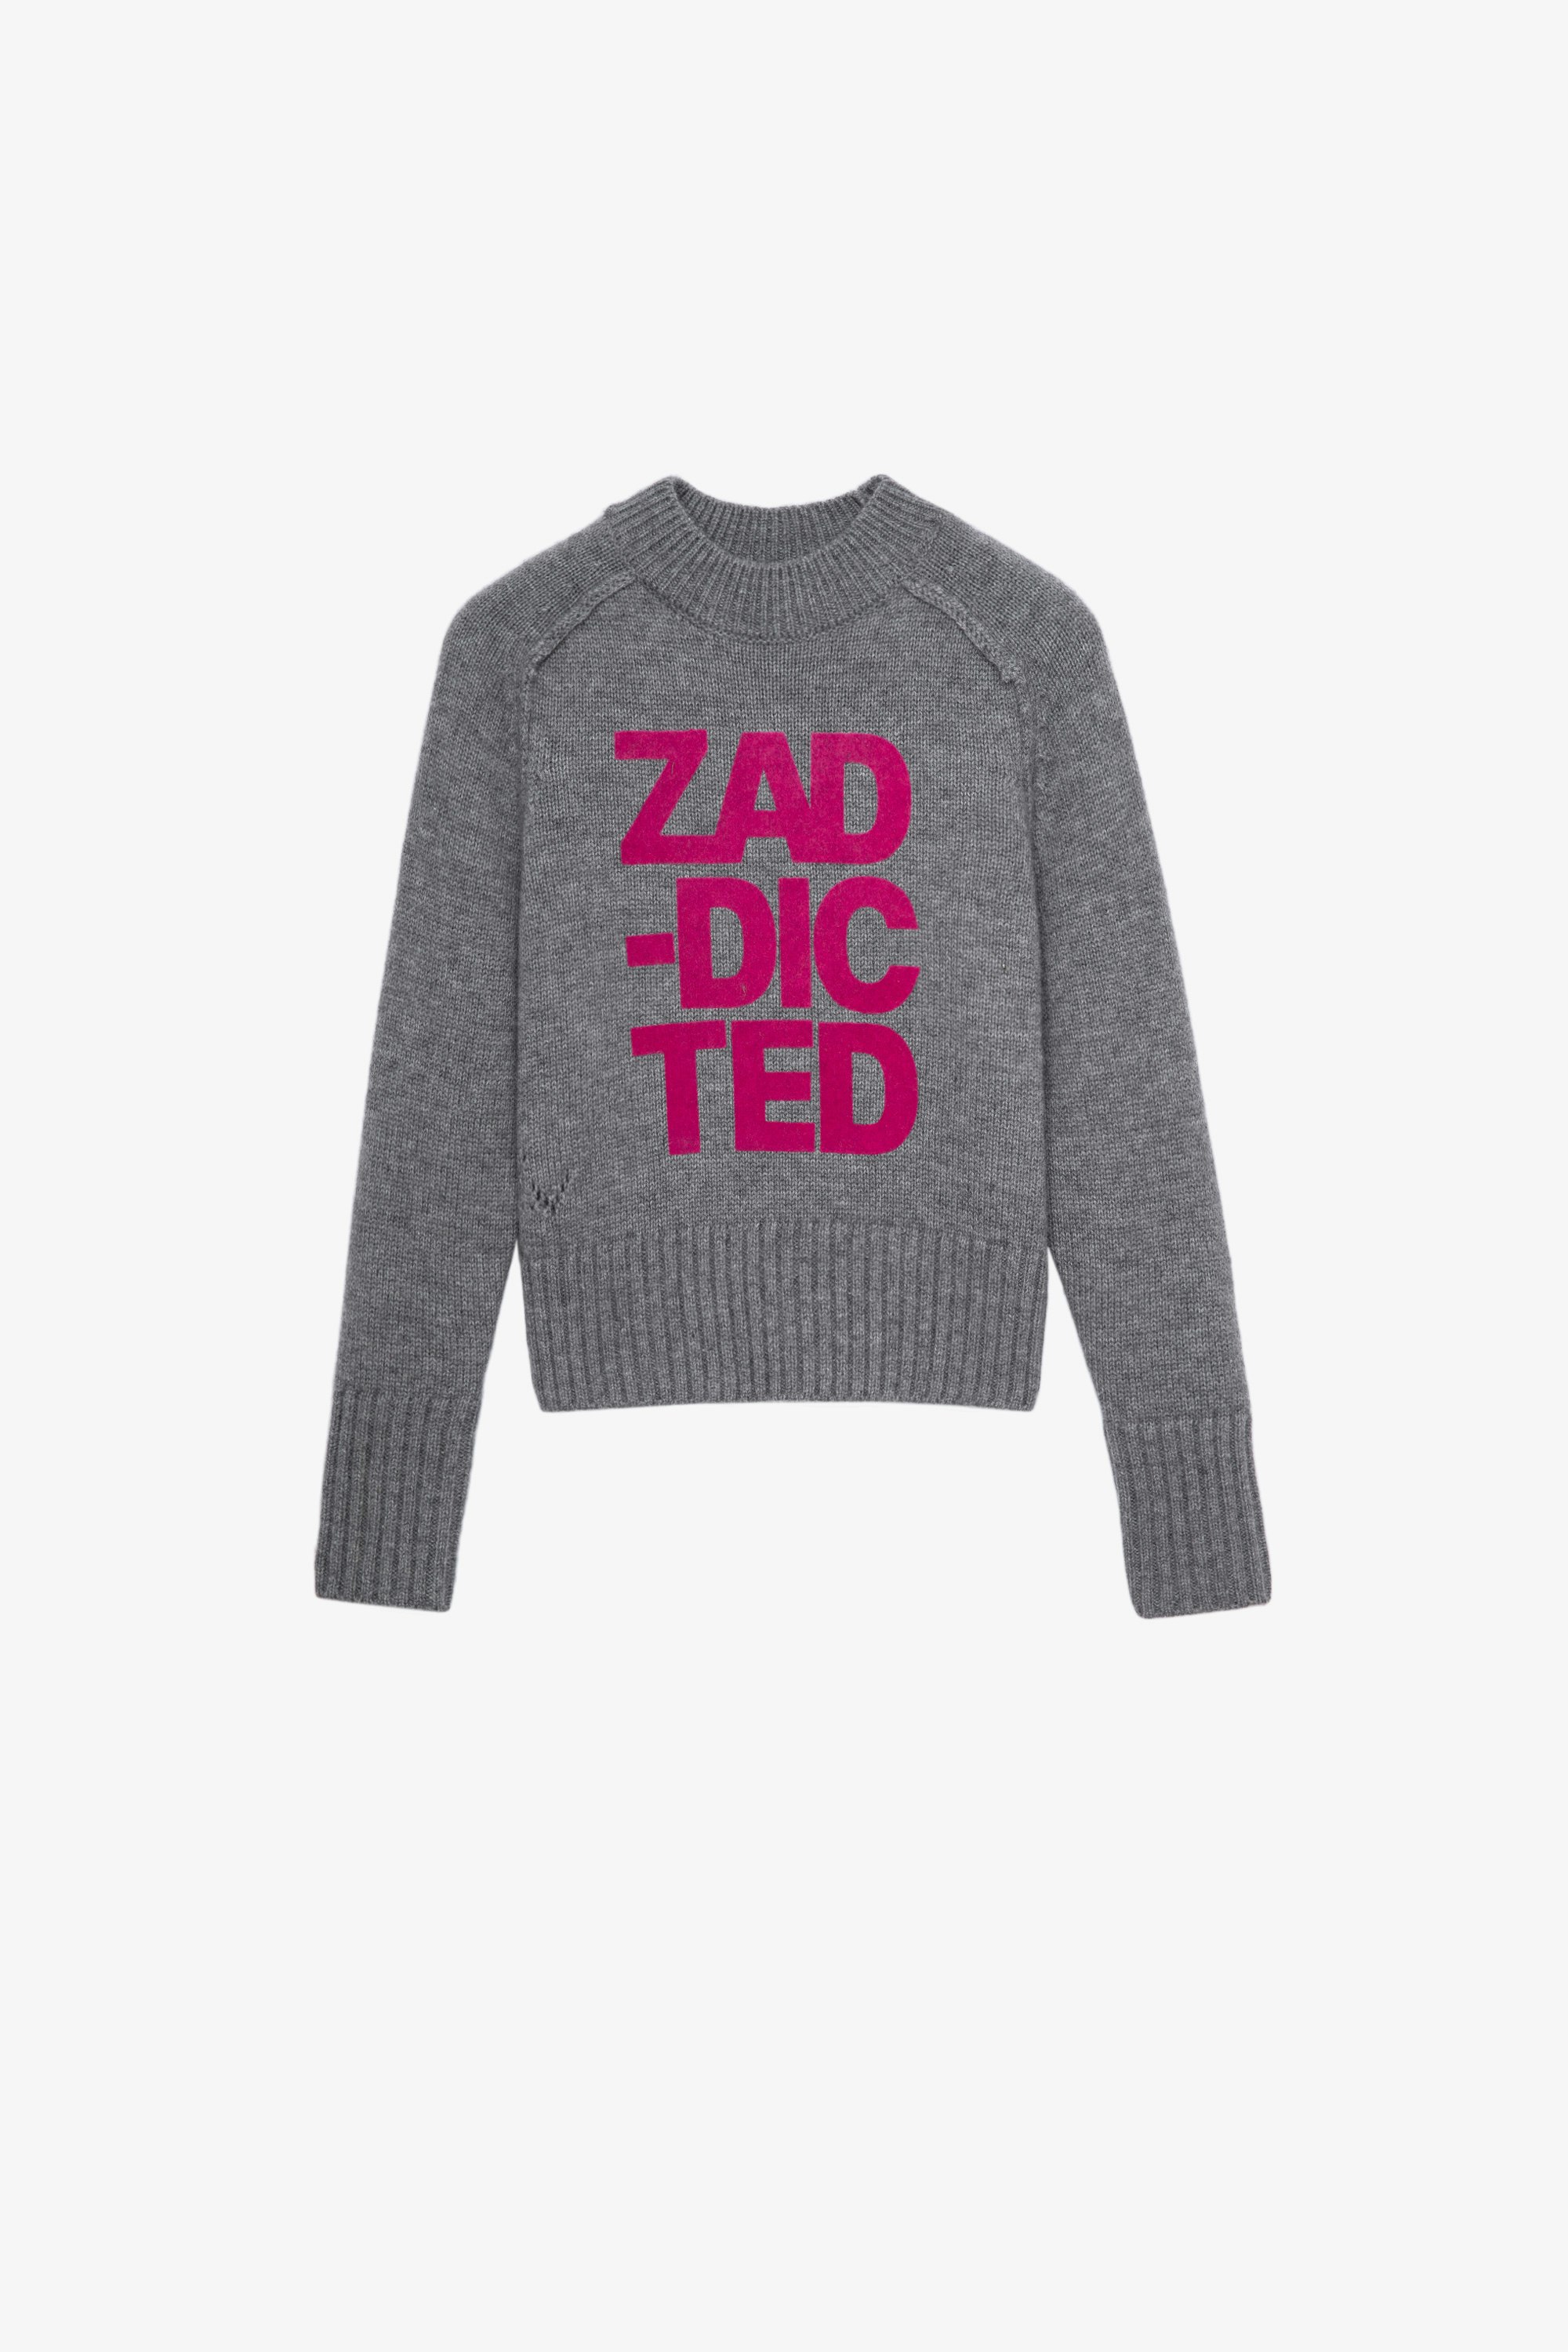 Milan Children’s ニット Children’s grey knitted turtleneck jumper with contrasting “Zaddicted” mantra 